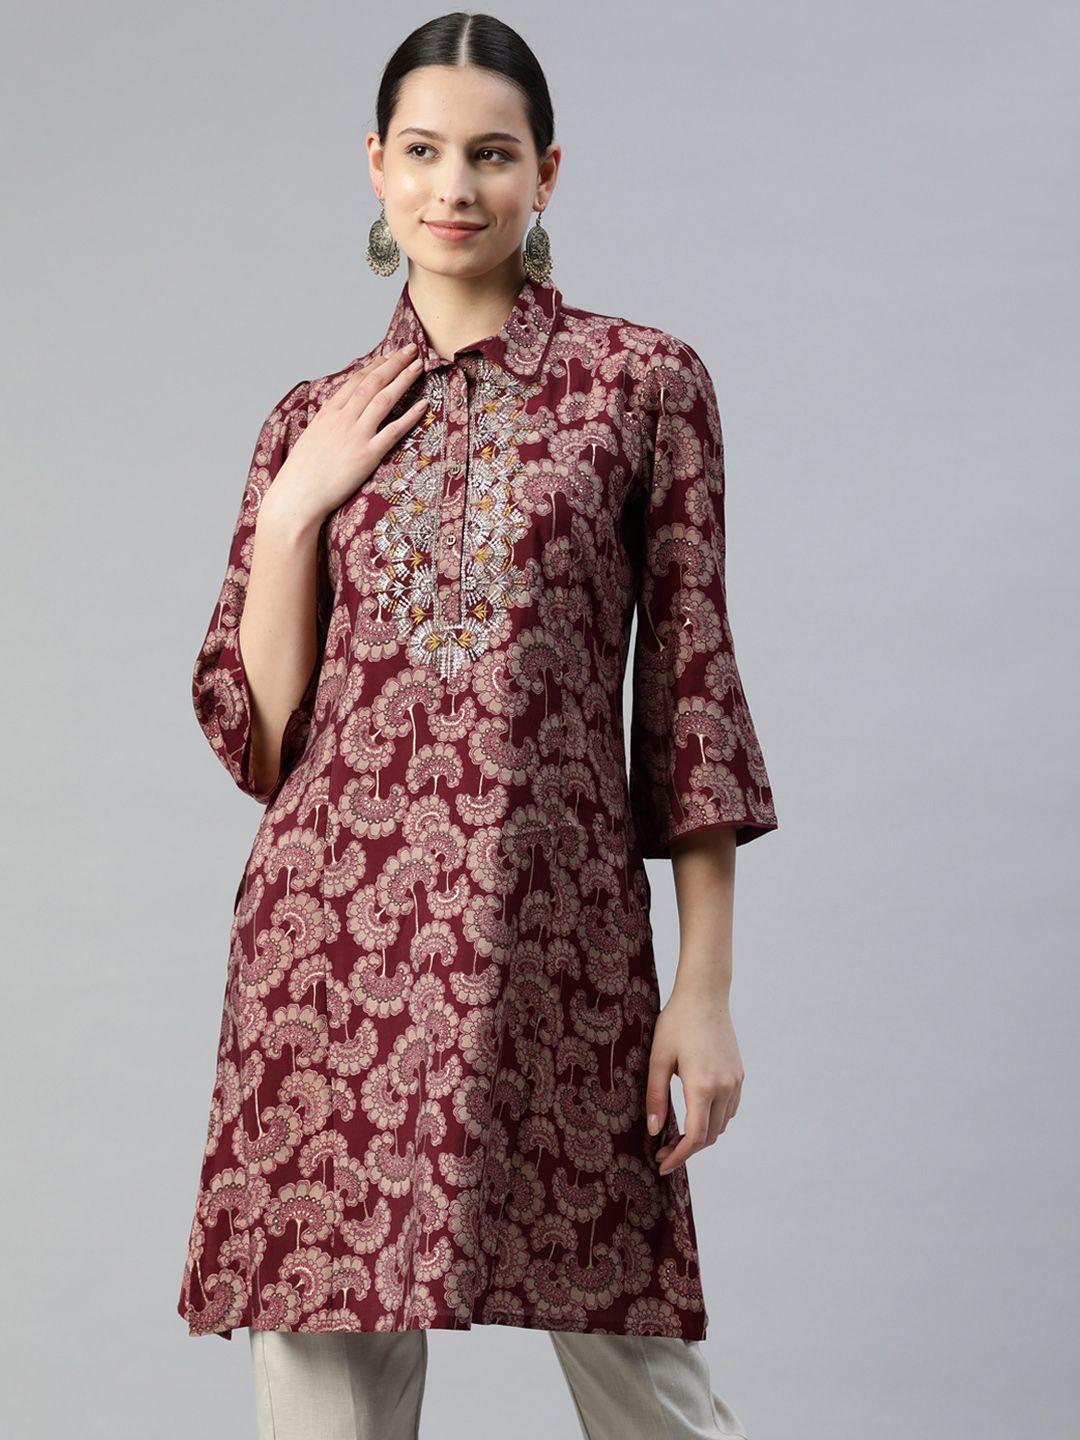 nayam-by-lakshita-modal-shirt-collar-printed-ethnic-tunic